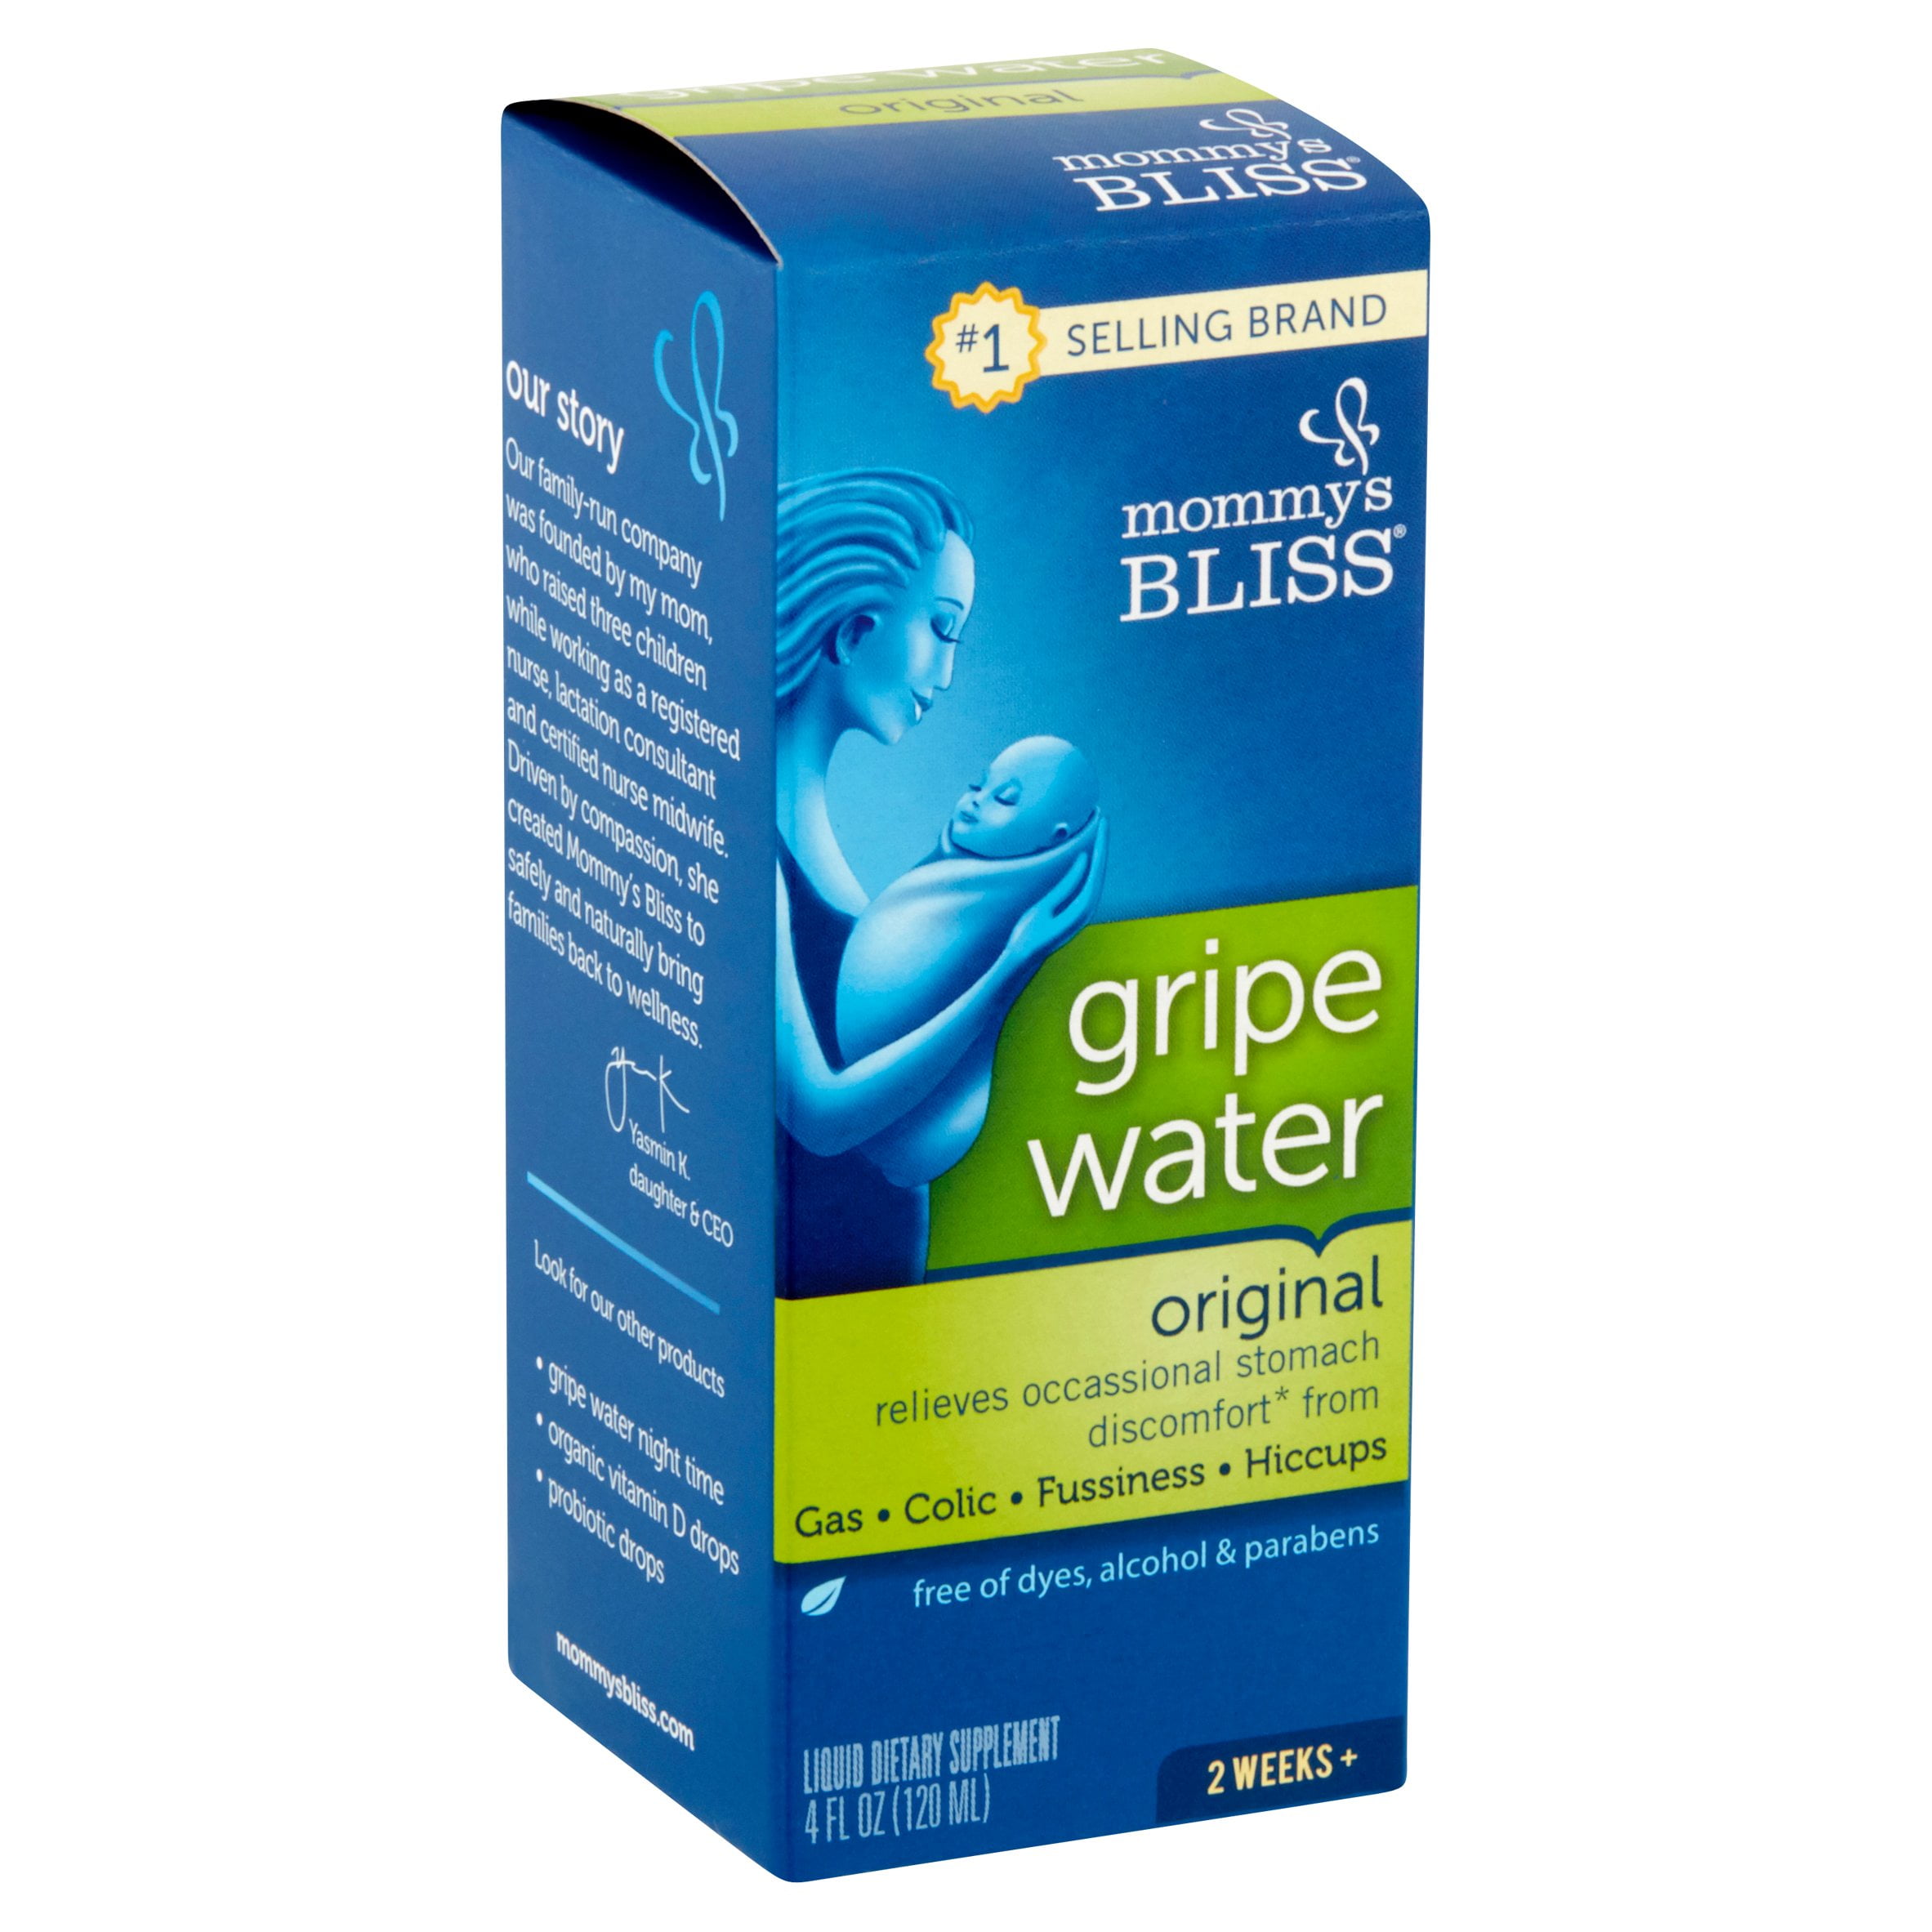 gripe water and tylenol